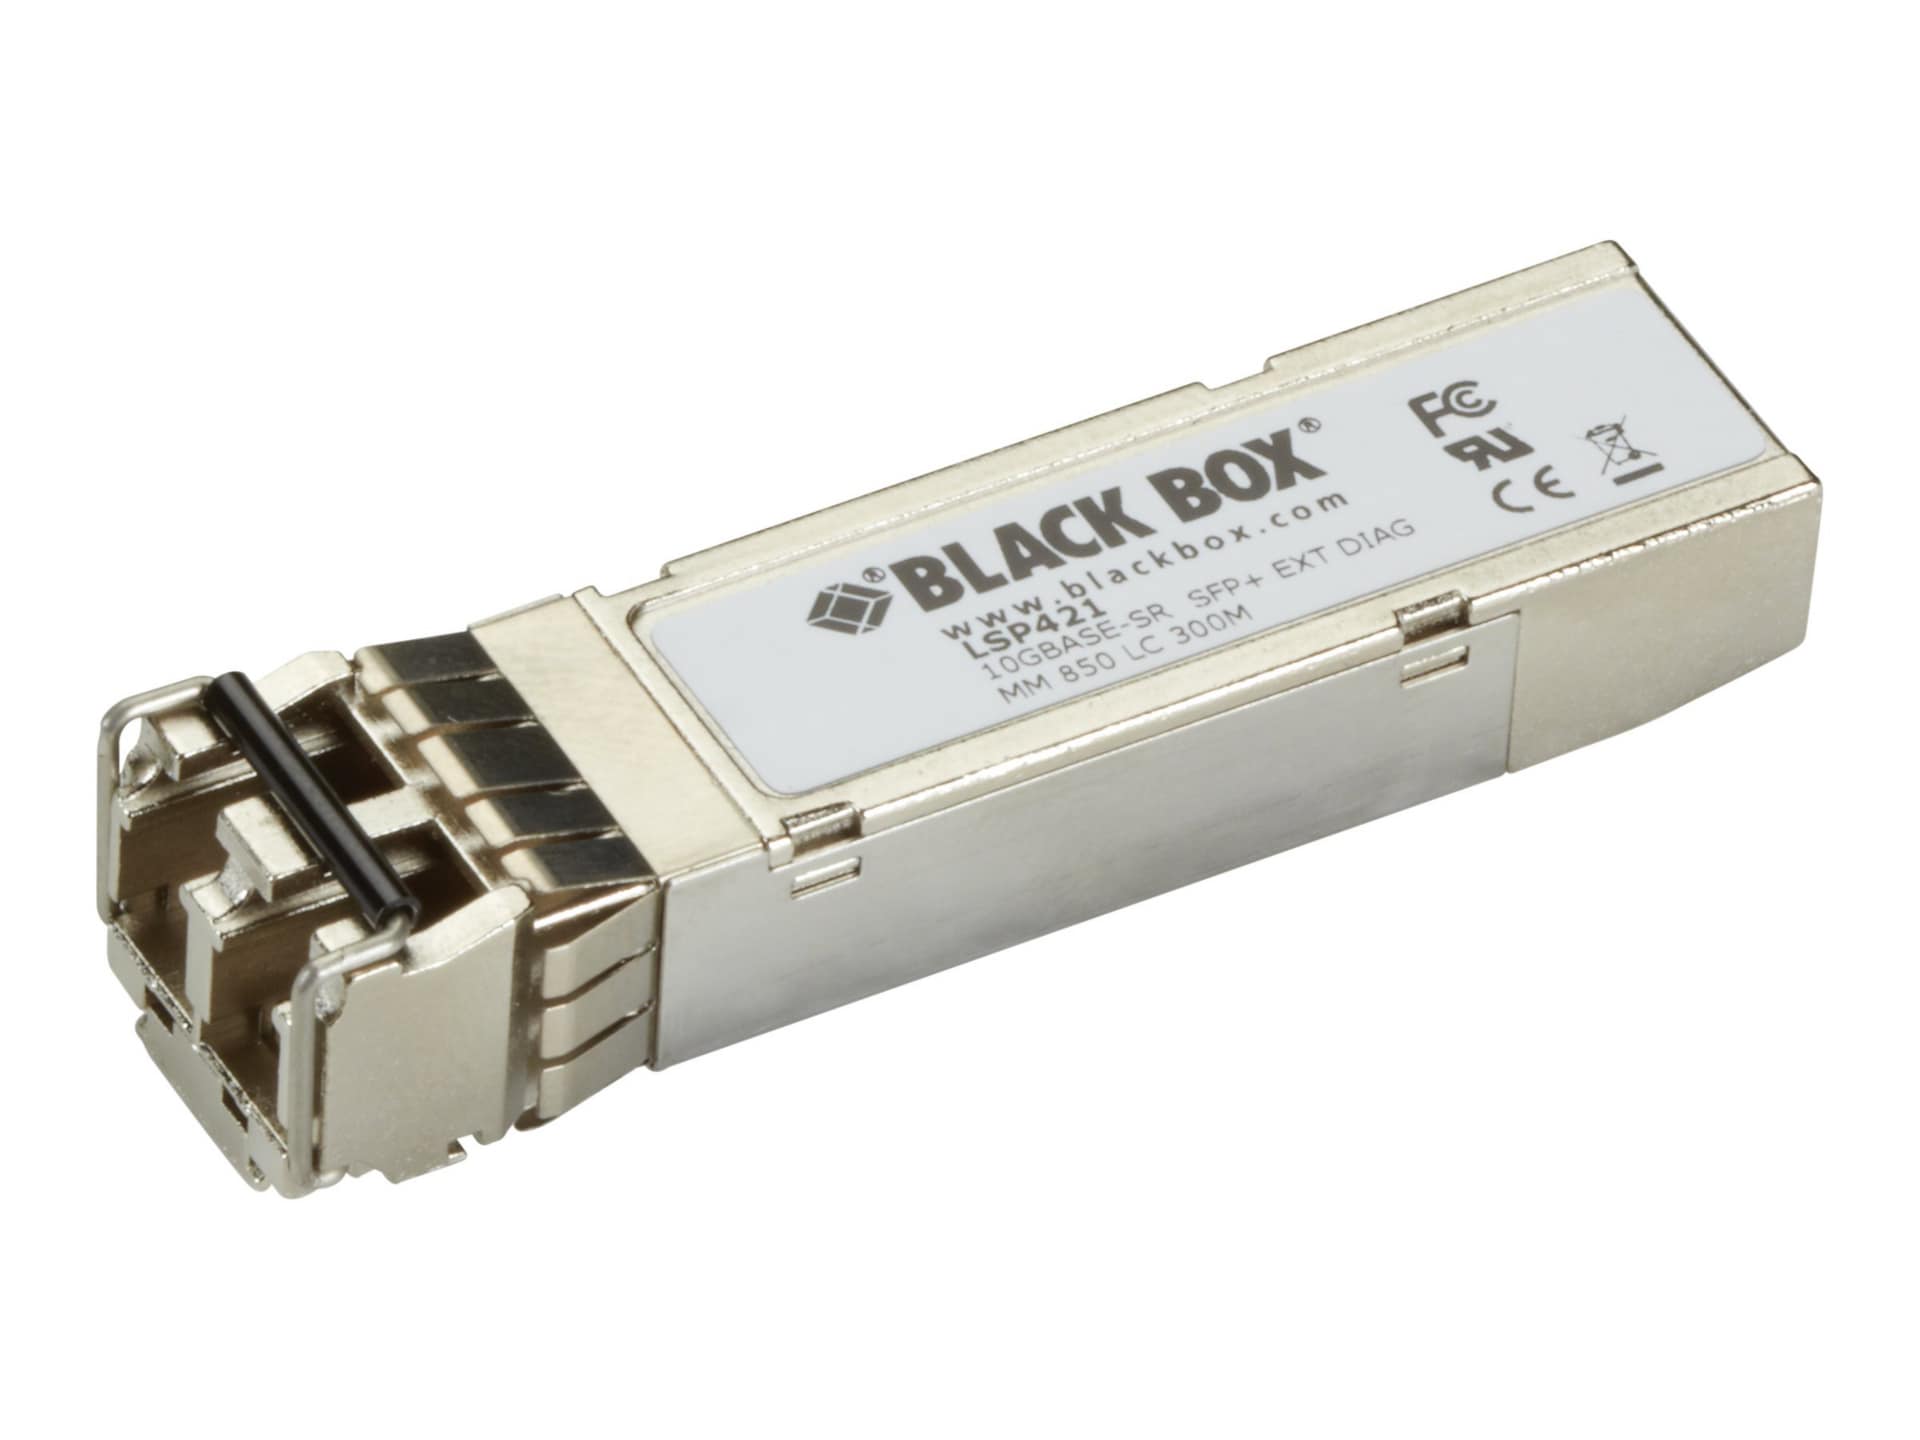 Black Box - SFP+ transceiver module - 10 GigE - TAA Compliant